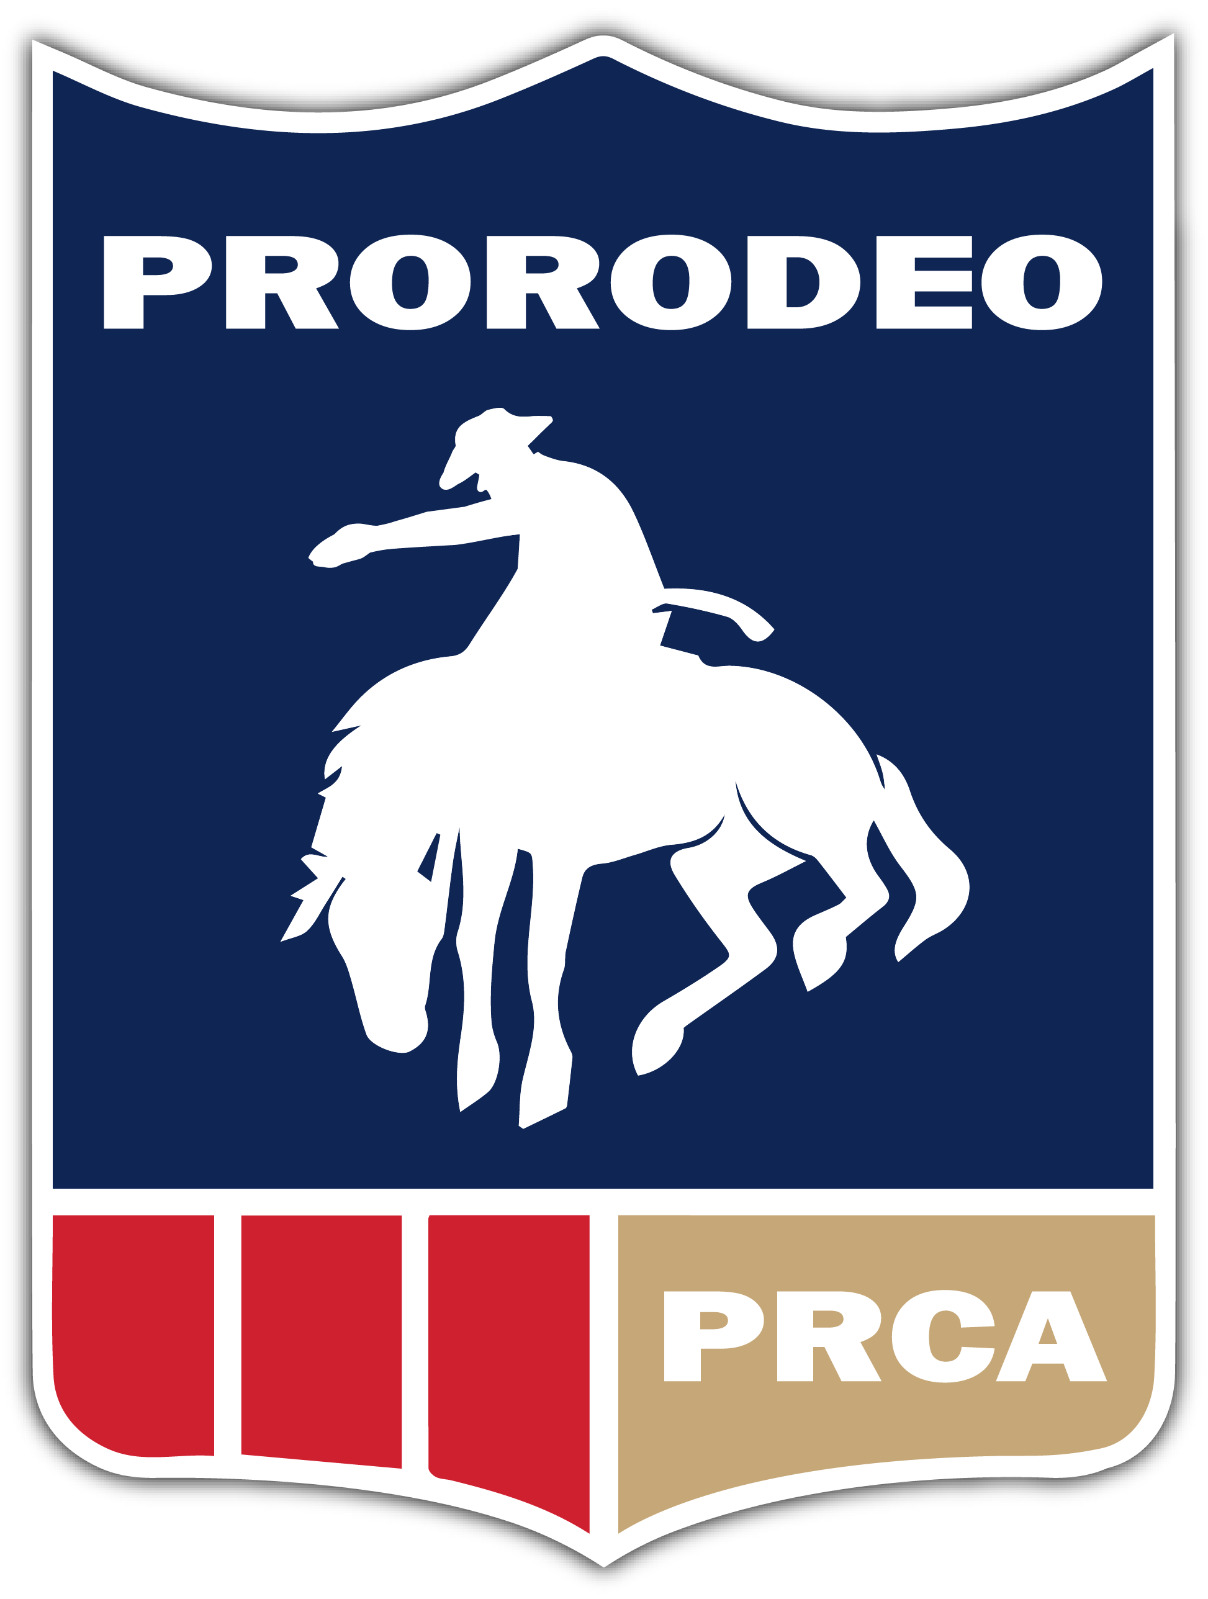 Professional Rodeo Cowboys Prorodeo PRCA Vinyl Sticker Decal Car Cornhole Board